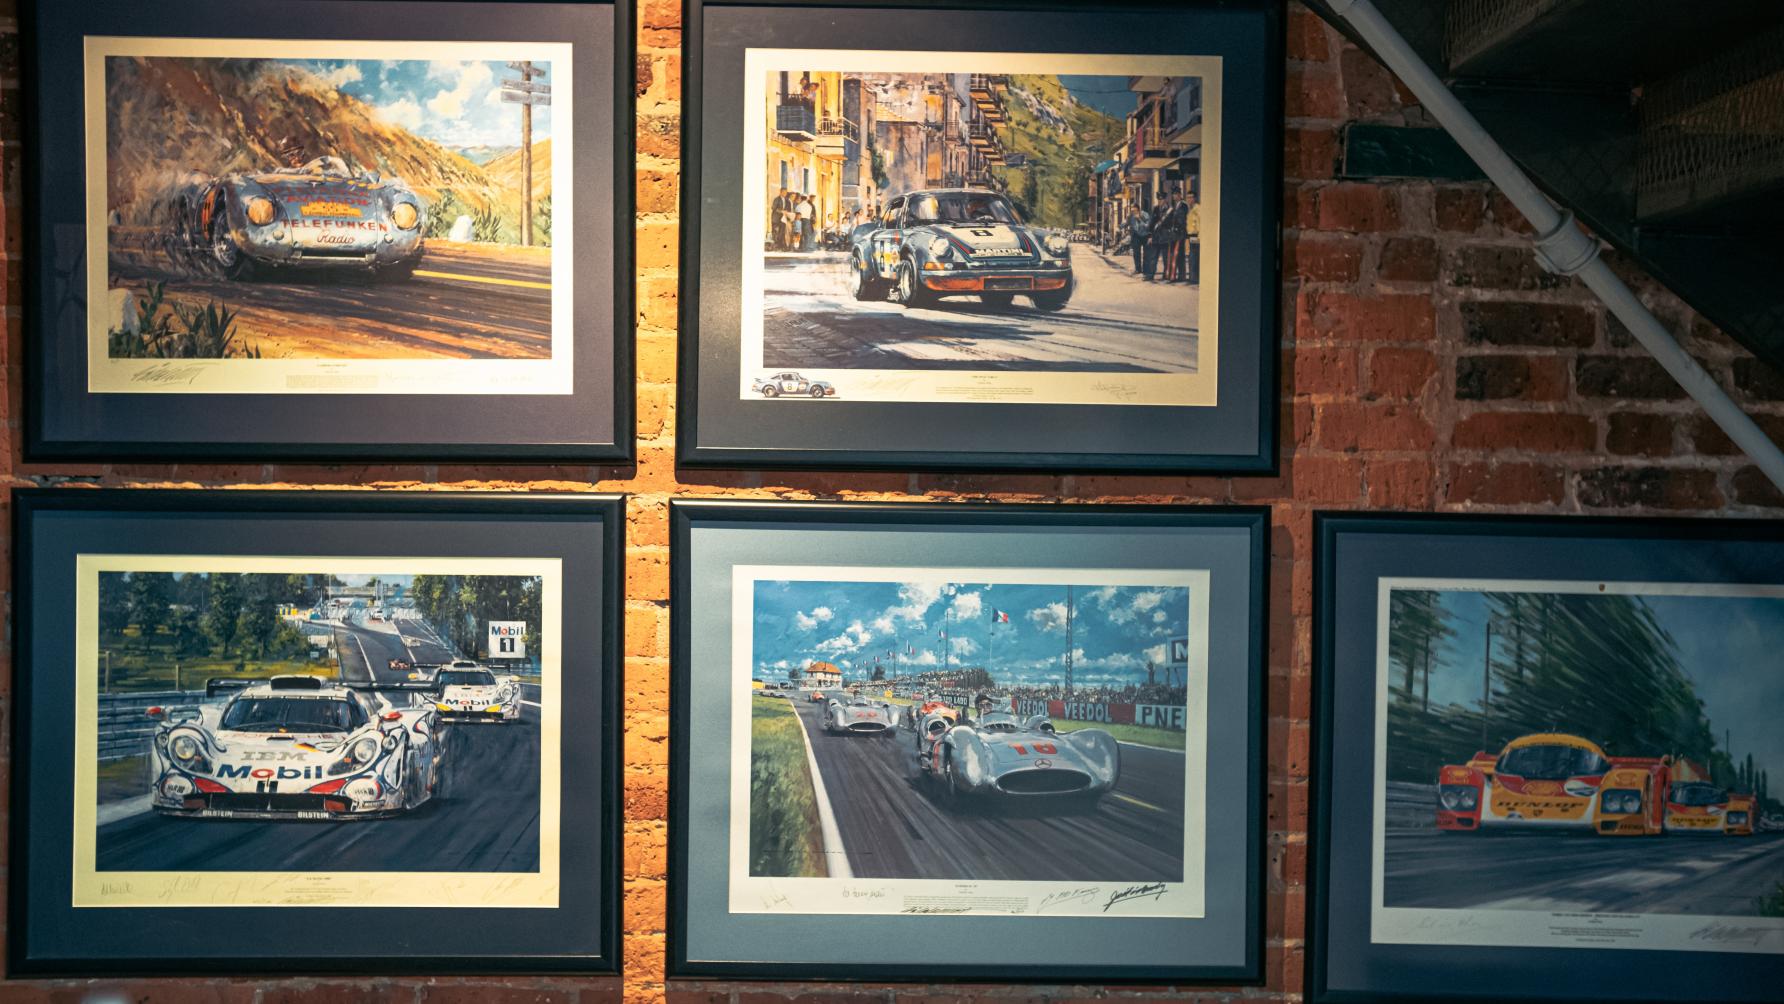 Framed photos of Porsche cars